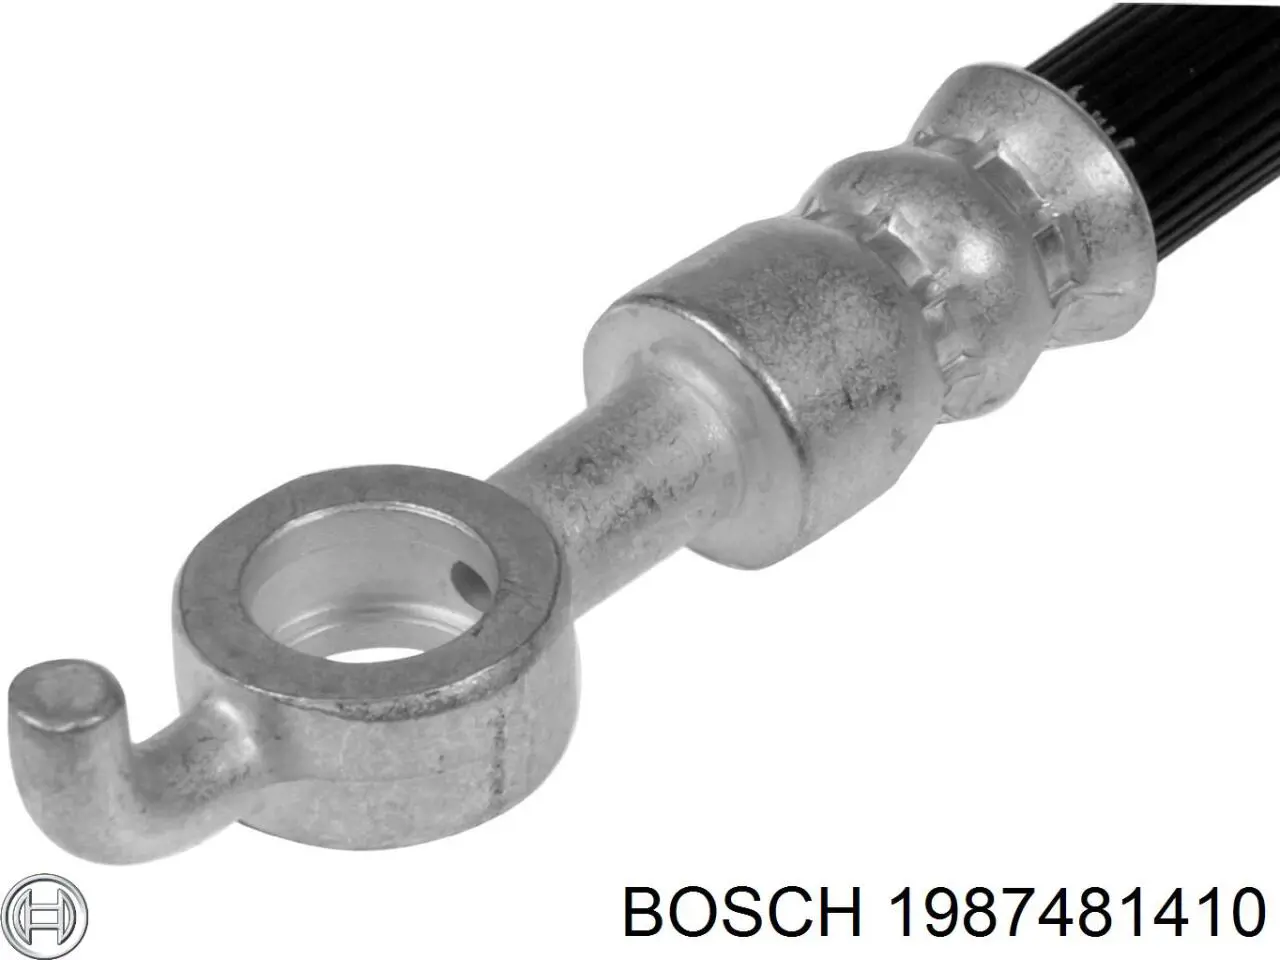 1987481410 Bosch latiguillo de freno delantero